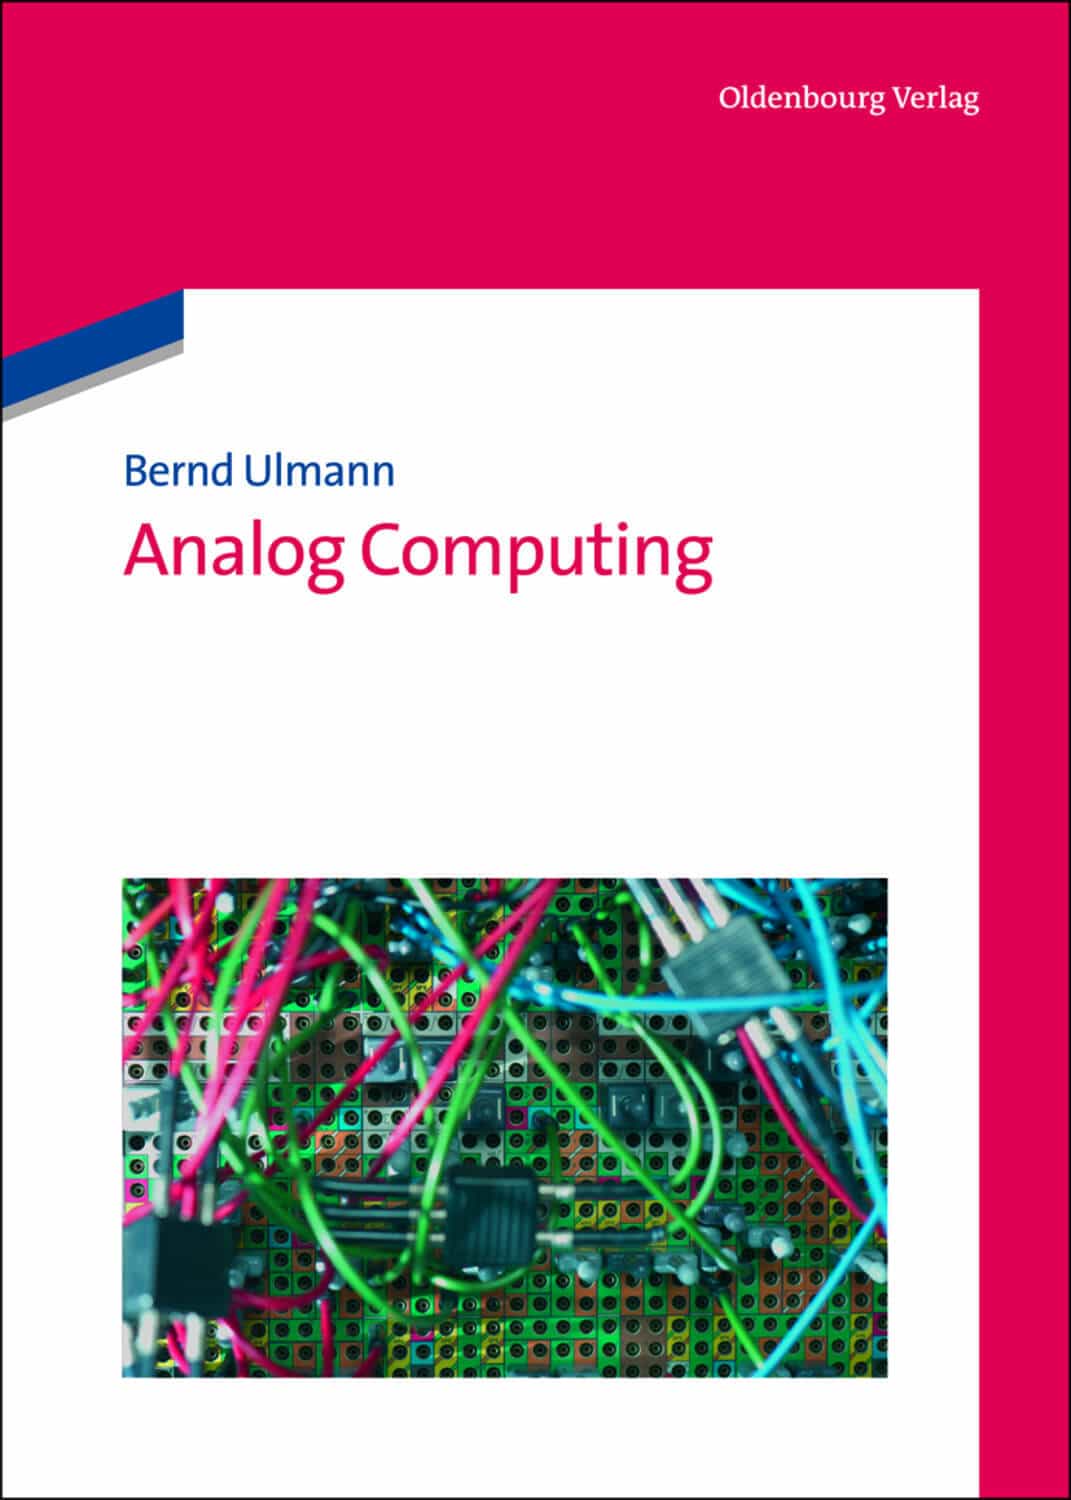 Bernd Ulmann Analog Computing Book Cover